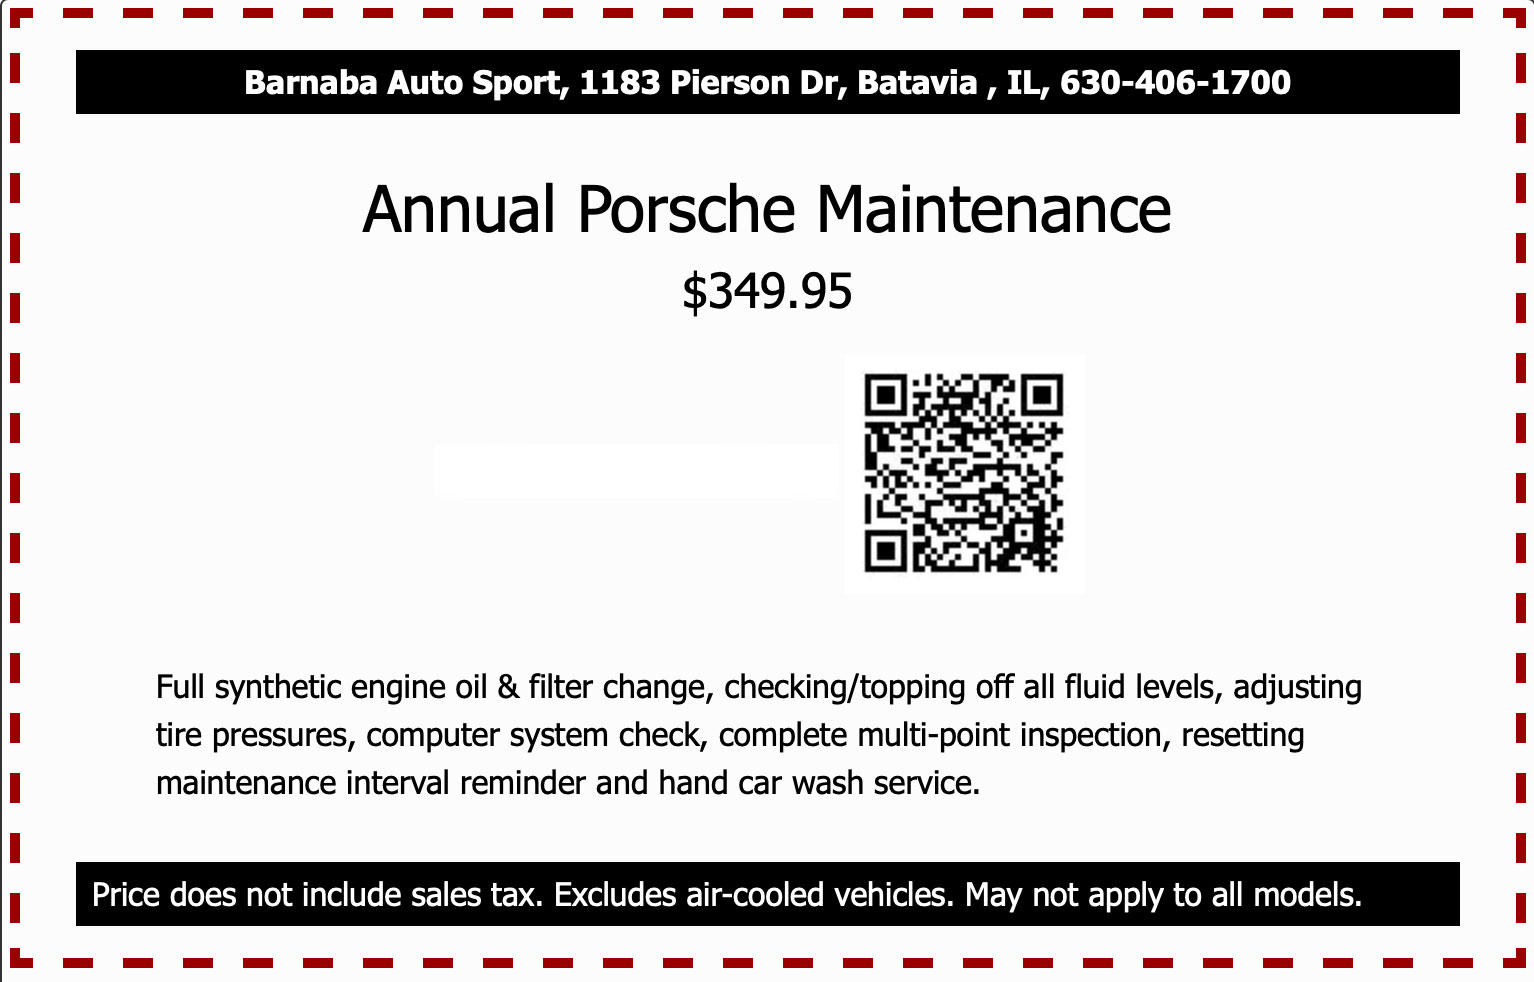 Annual Porsche Maintenance